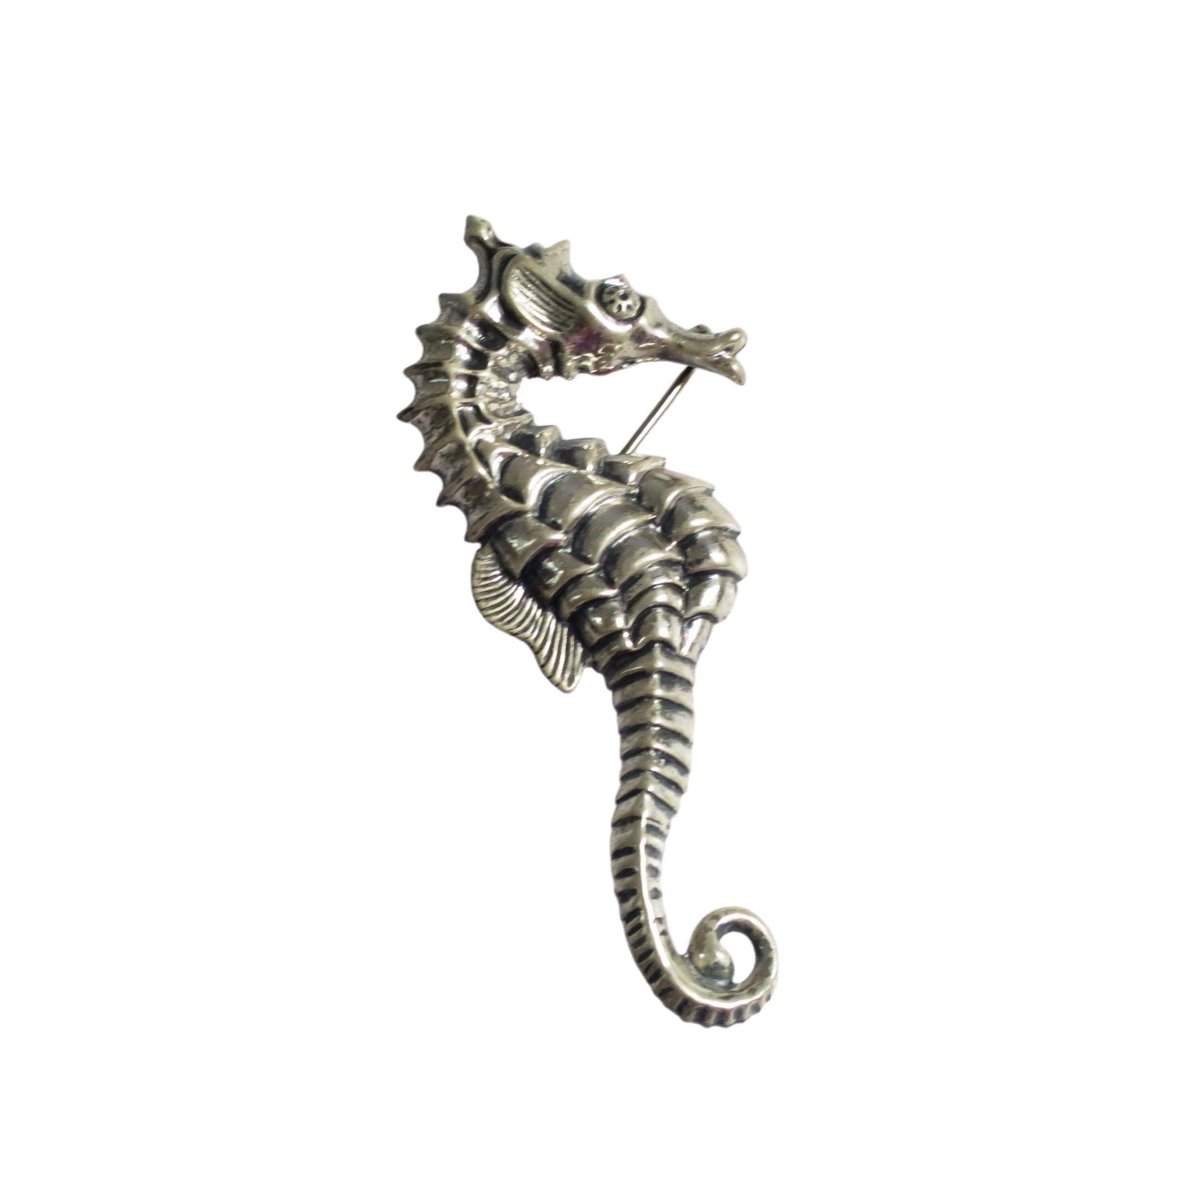 Vintage Sterling Silver Seahorse by Beau Craft .925, Vintage Pin,  Hatpin Accessories tuppu.net/1307997d #PinItT23 #SMILEttCIJ #SMILEtt23 #EtsyteamUnity